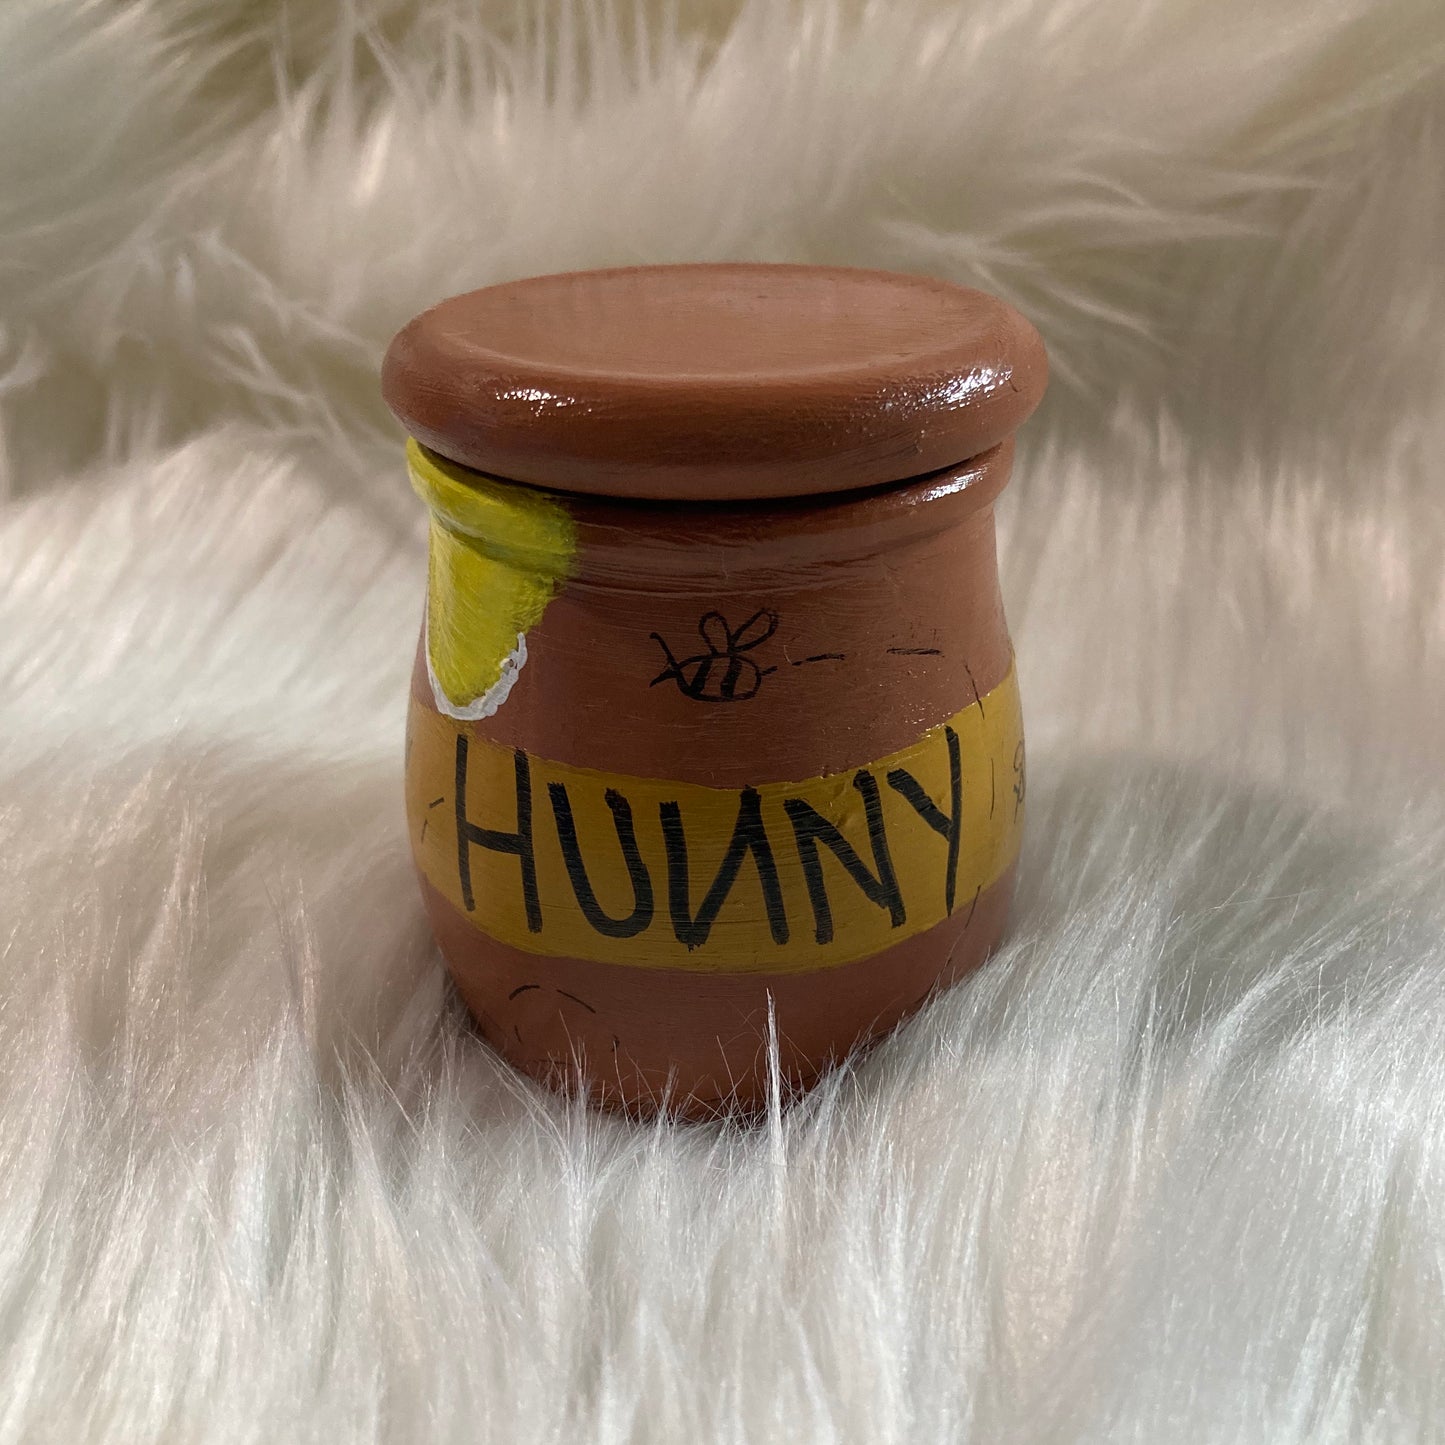 Pooh’s Hunny Jar votive candle